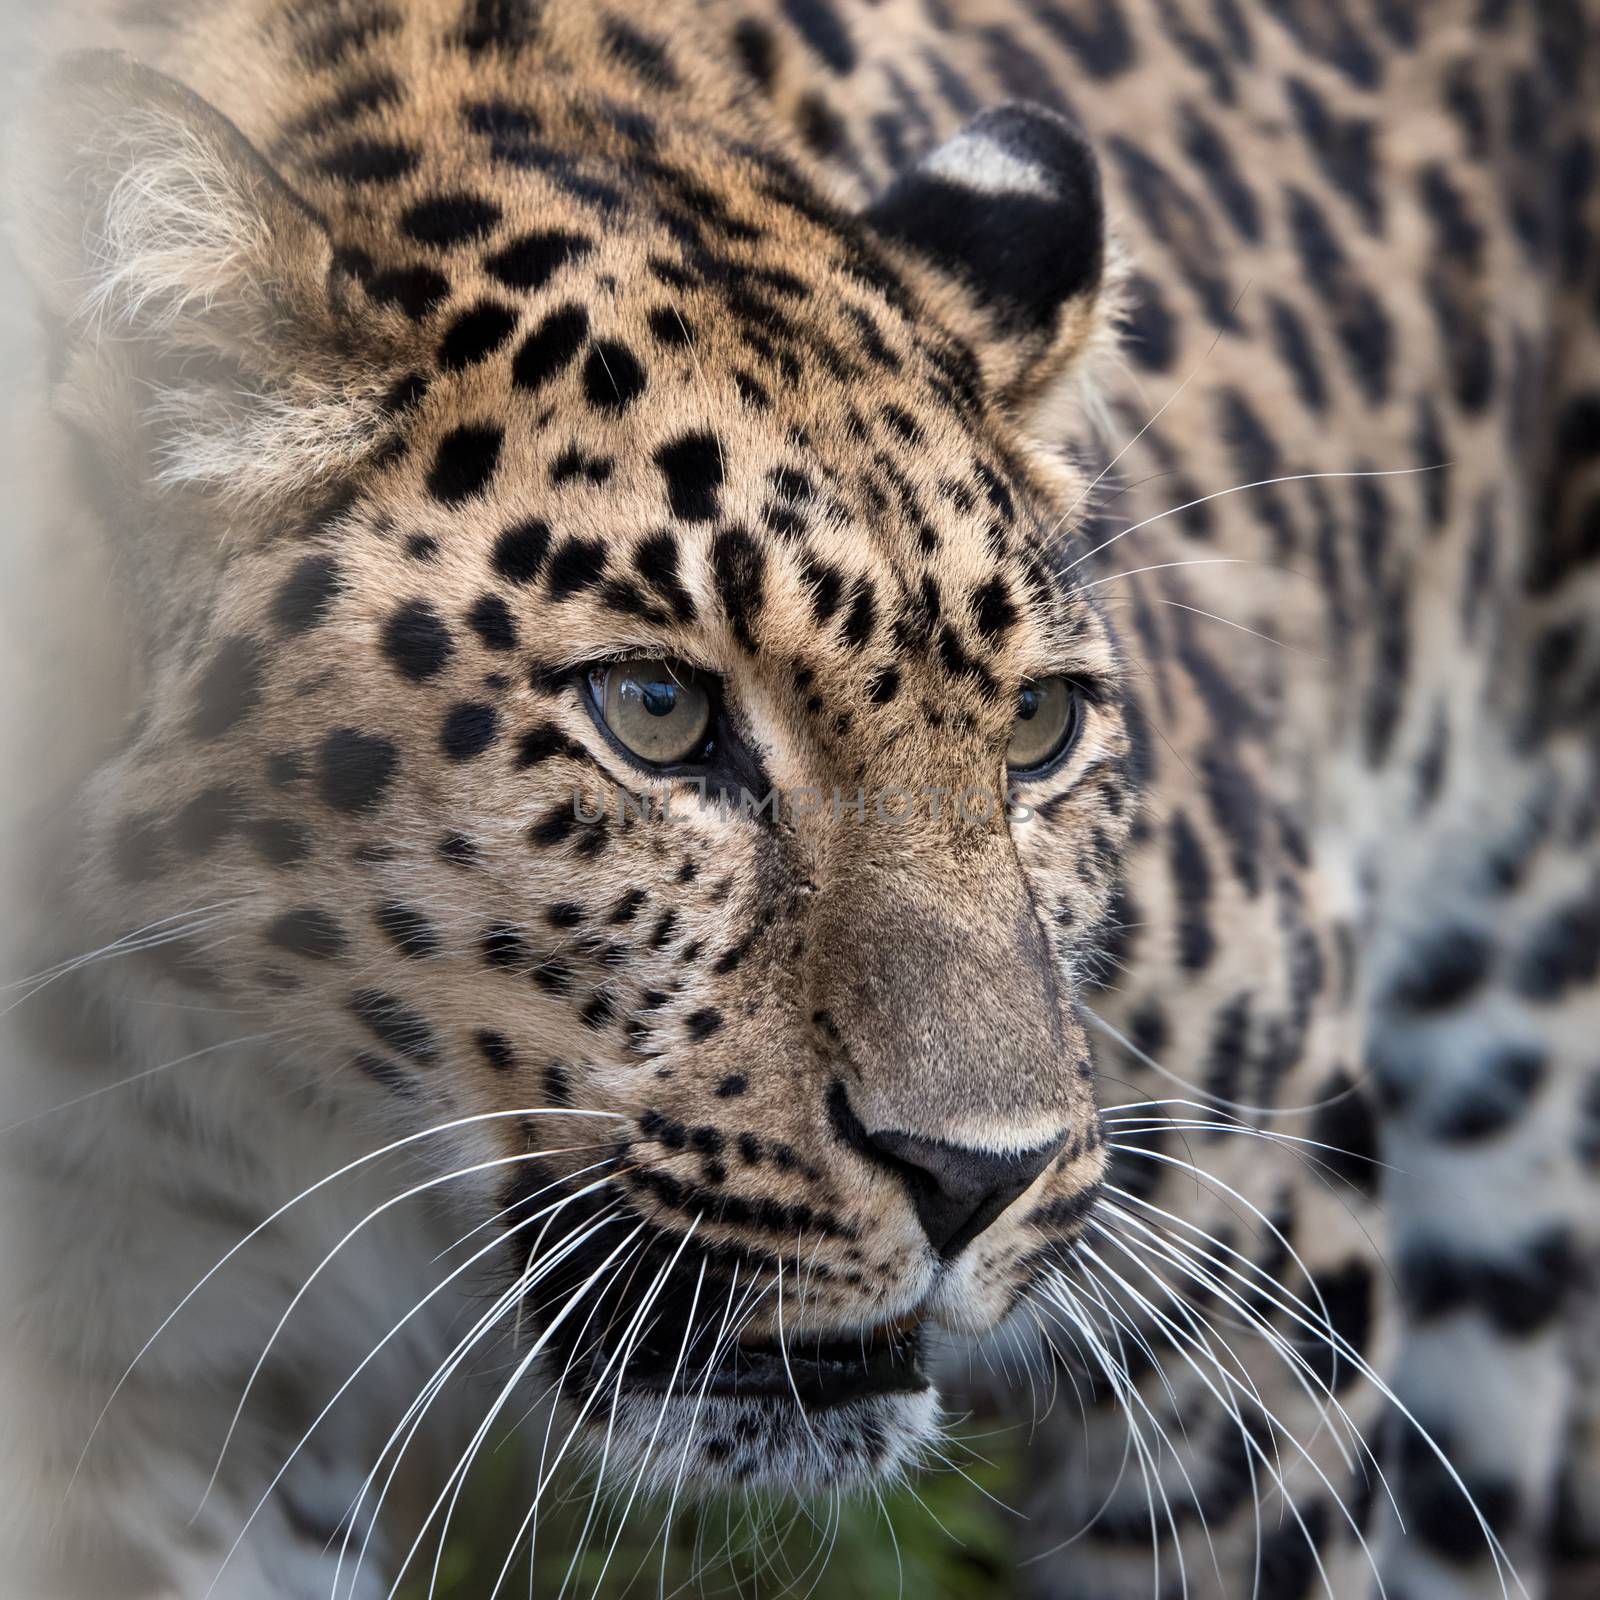 UK, Welwyn - October 2017: Amur leopard in captivity - close up